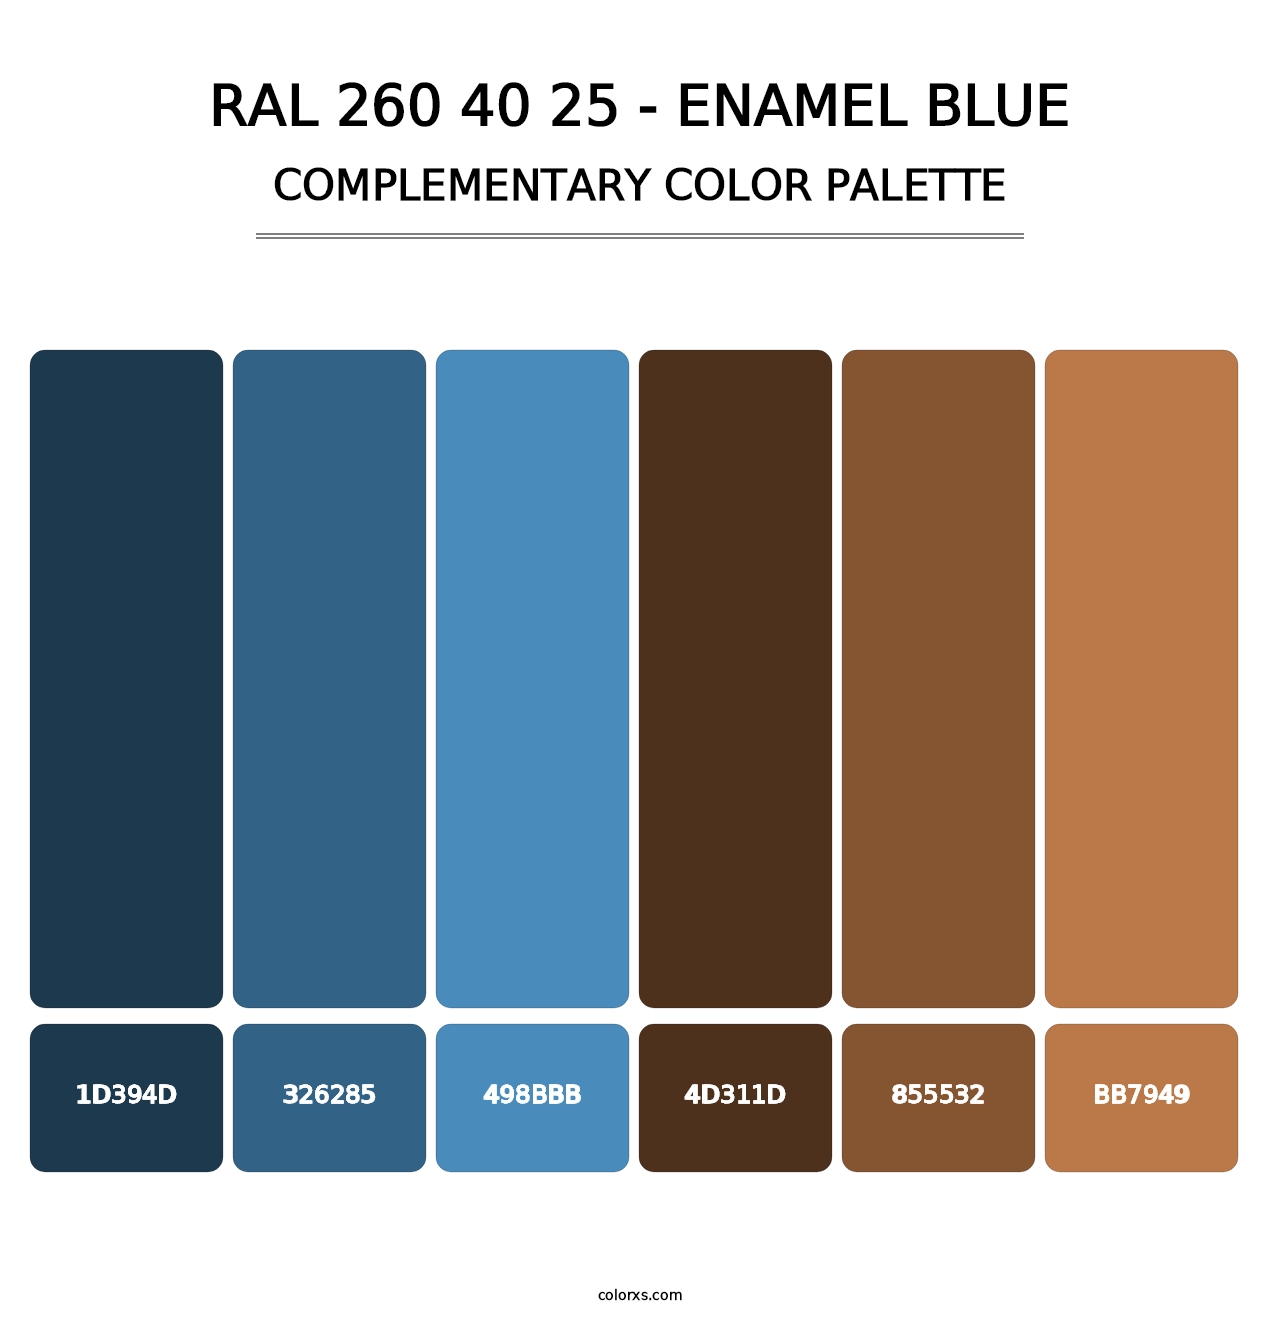 RAL 260 40 25 - Enamel Blue - Complementary Color Palette